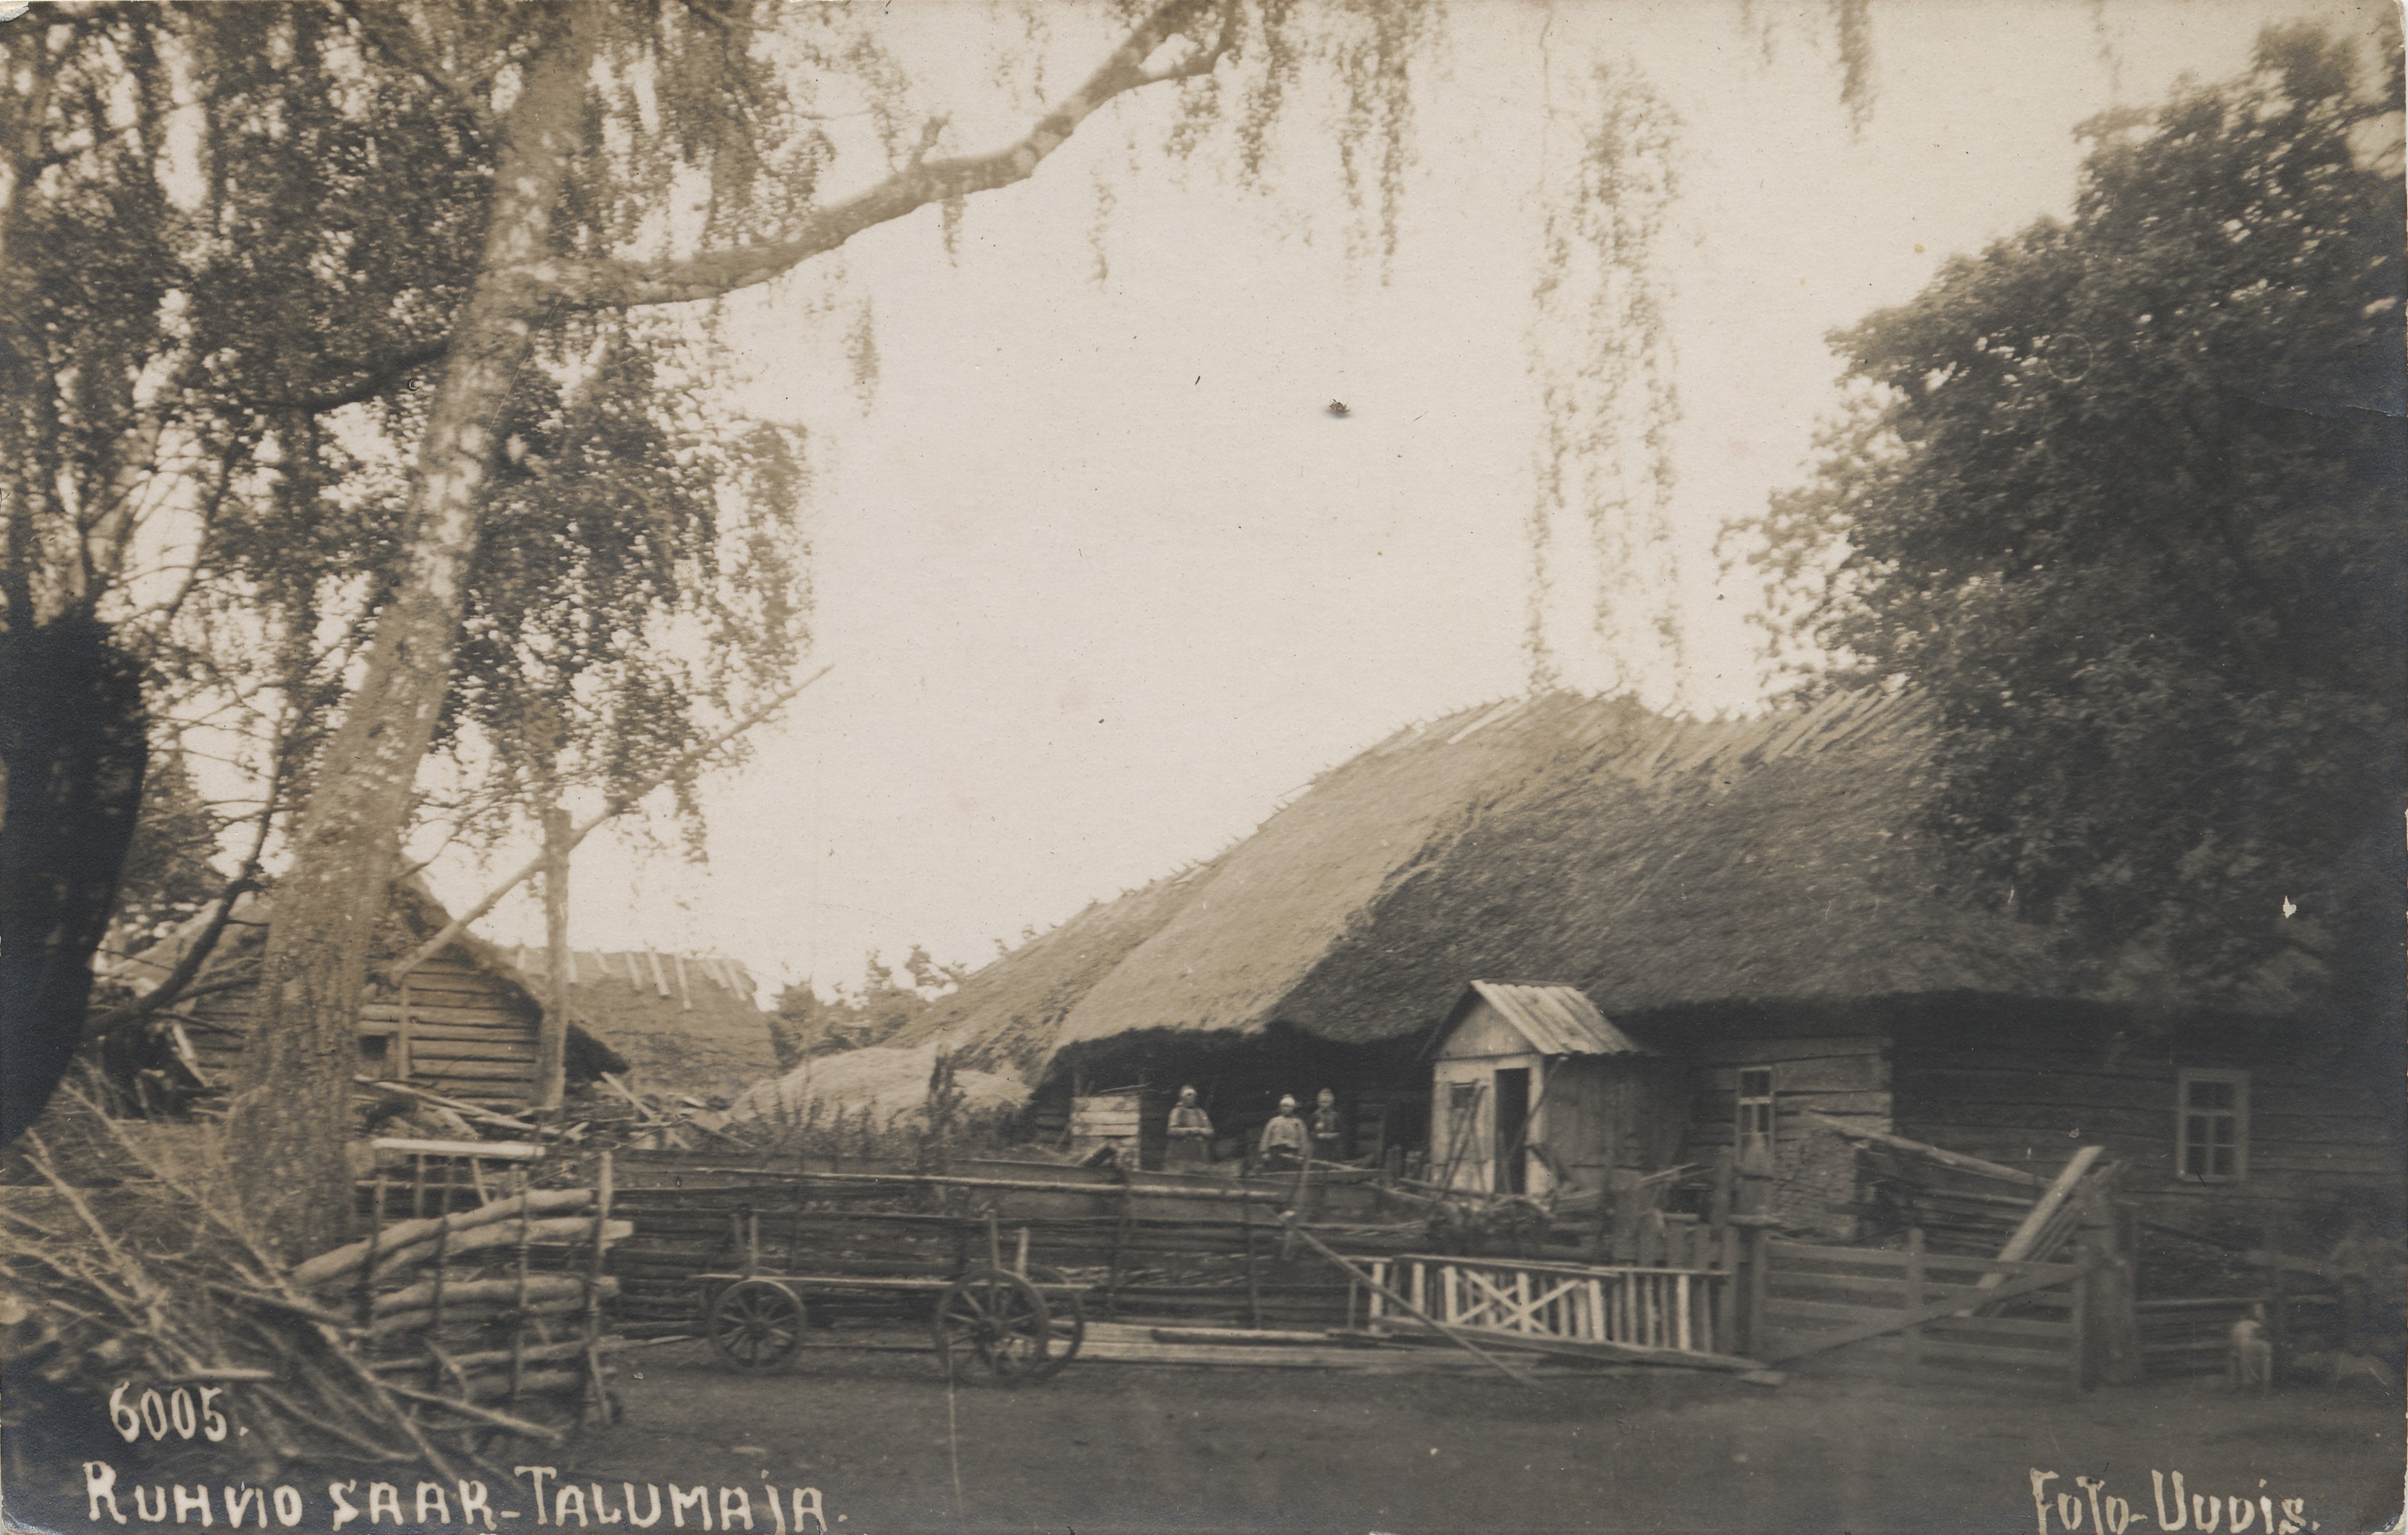 Ruhno Island : farmhouse